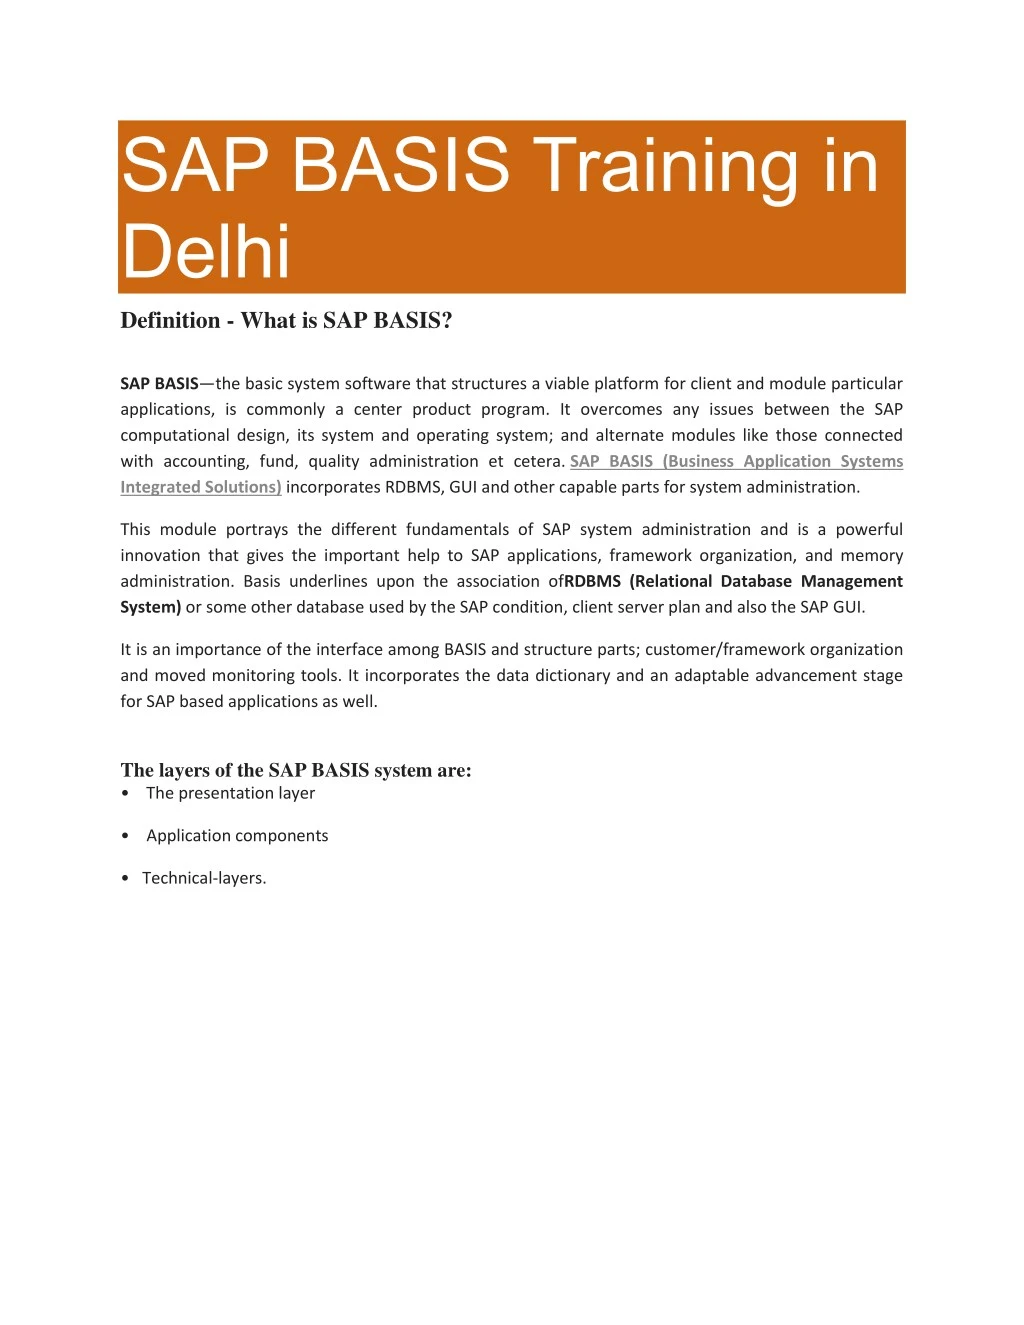 sap basis training in delhi definition what